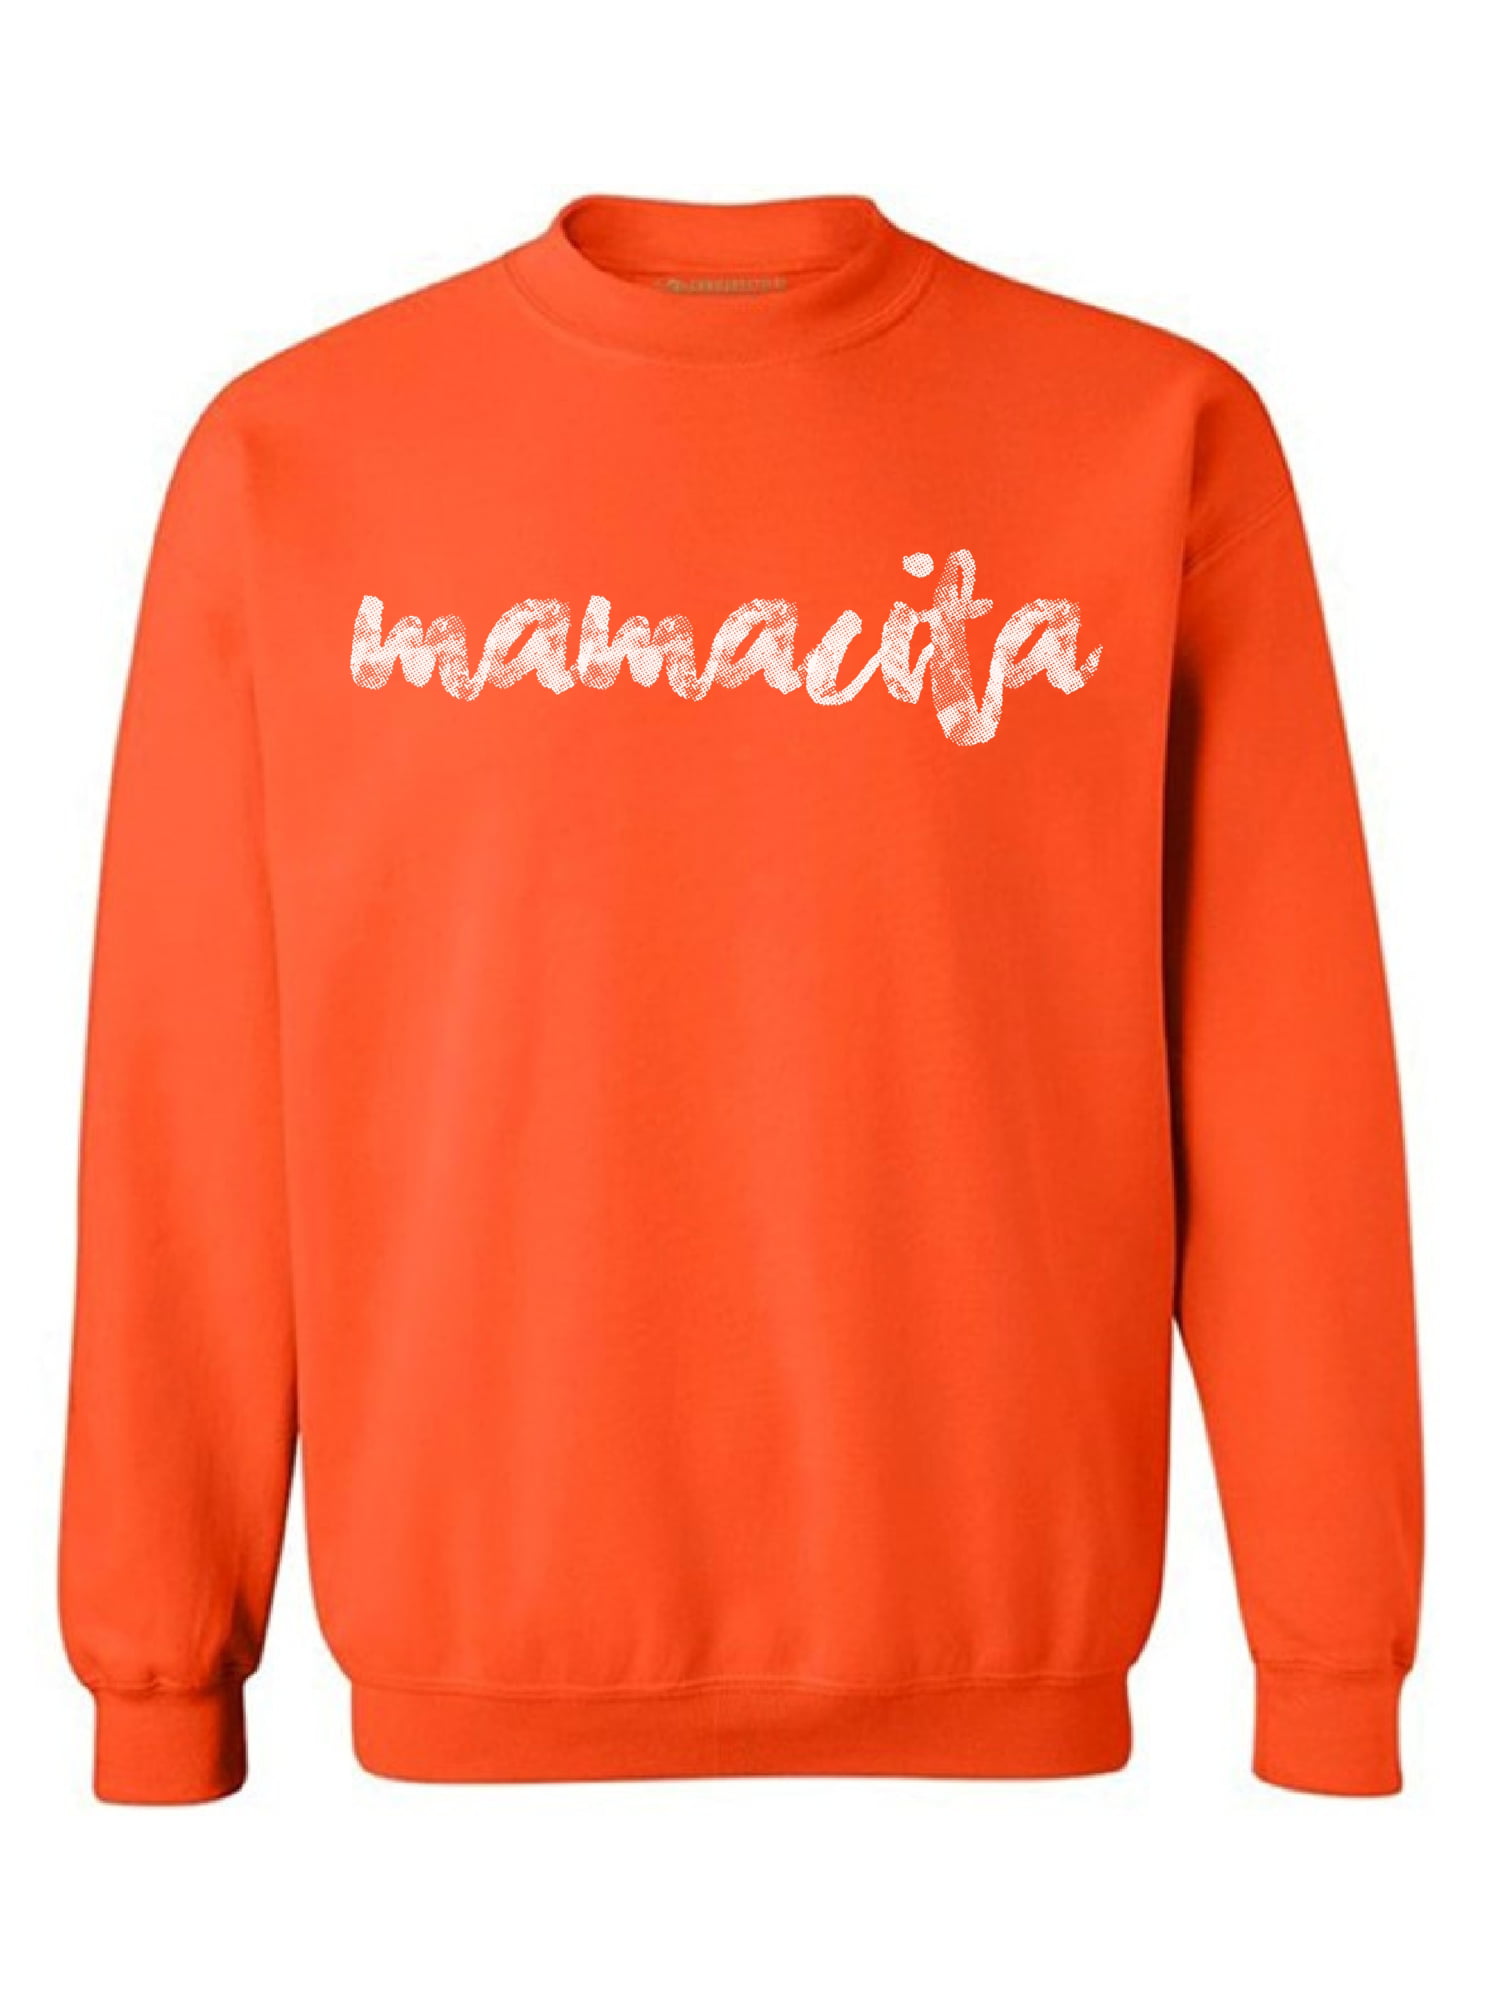 Awkward Styles Mamacita Needs a Margarita Sweatshirt Mamacita Mexican Styled Crewneck 